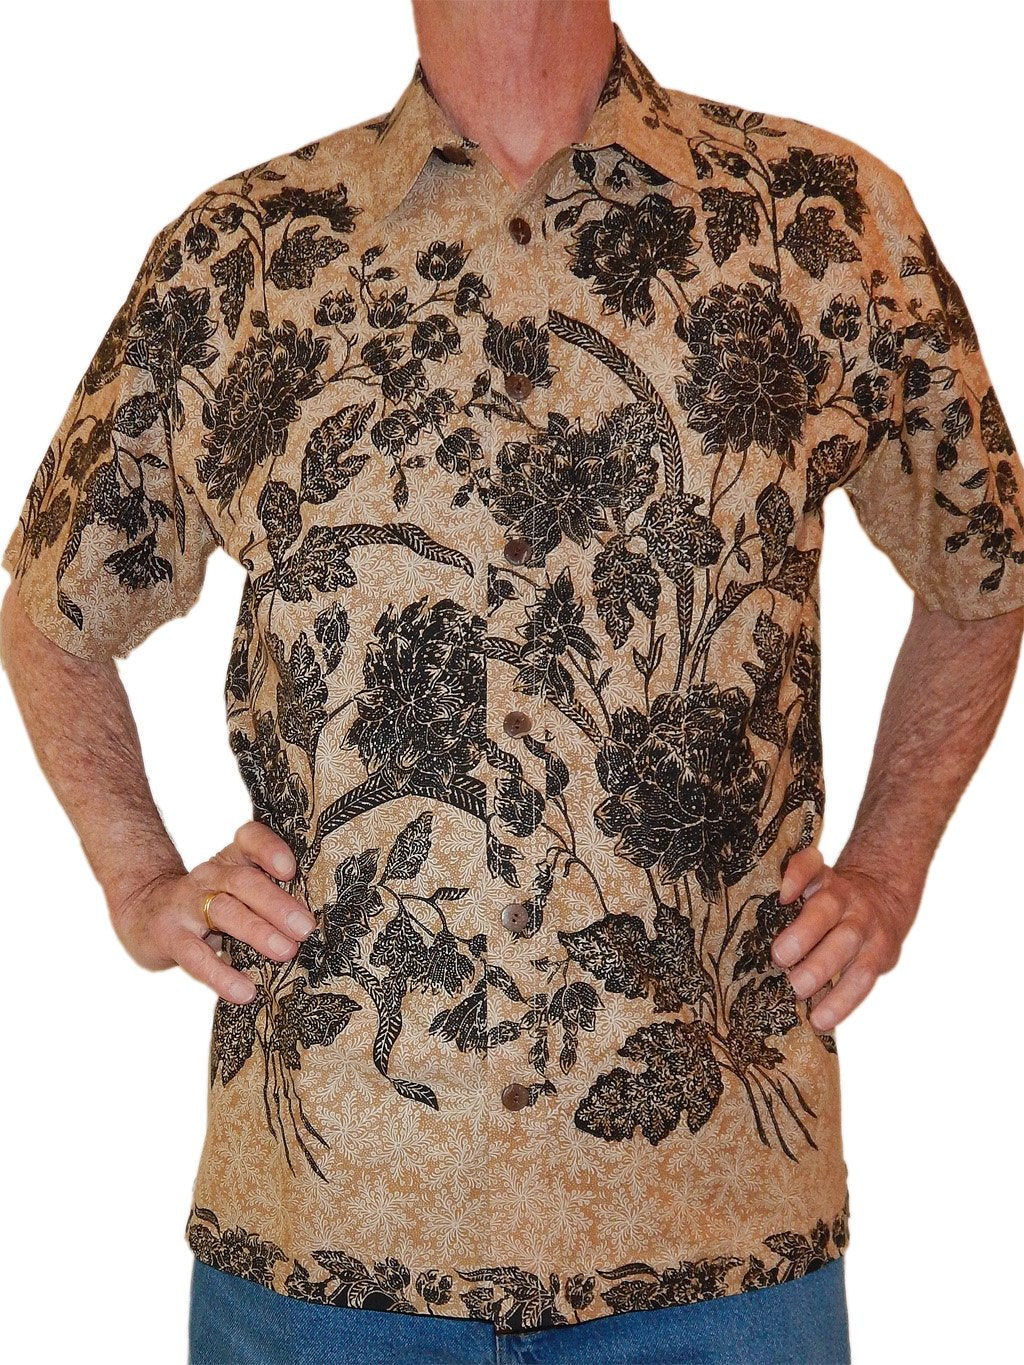 Pekalongan Bloom and Fern Leaf design. Classic Men's Collared, Short Sleeve, Left-Breast Pocket, Handcrafted 100% Cotton Batik Shirt from Java, Indonesia